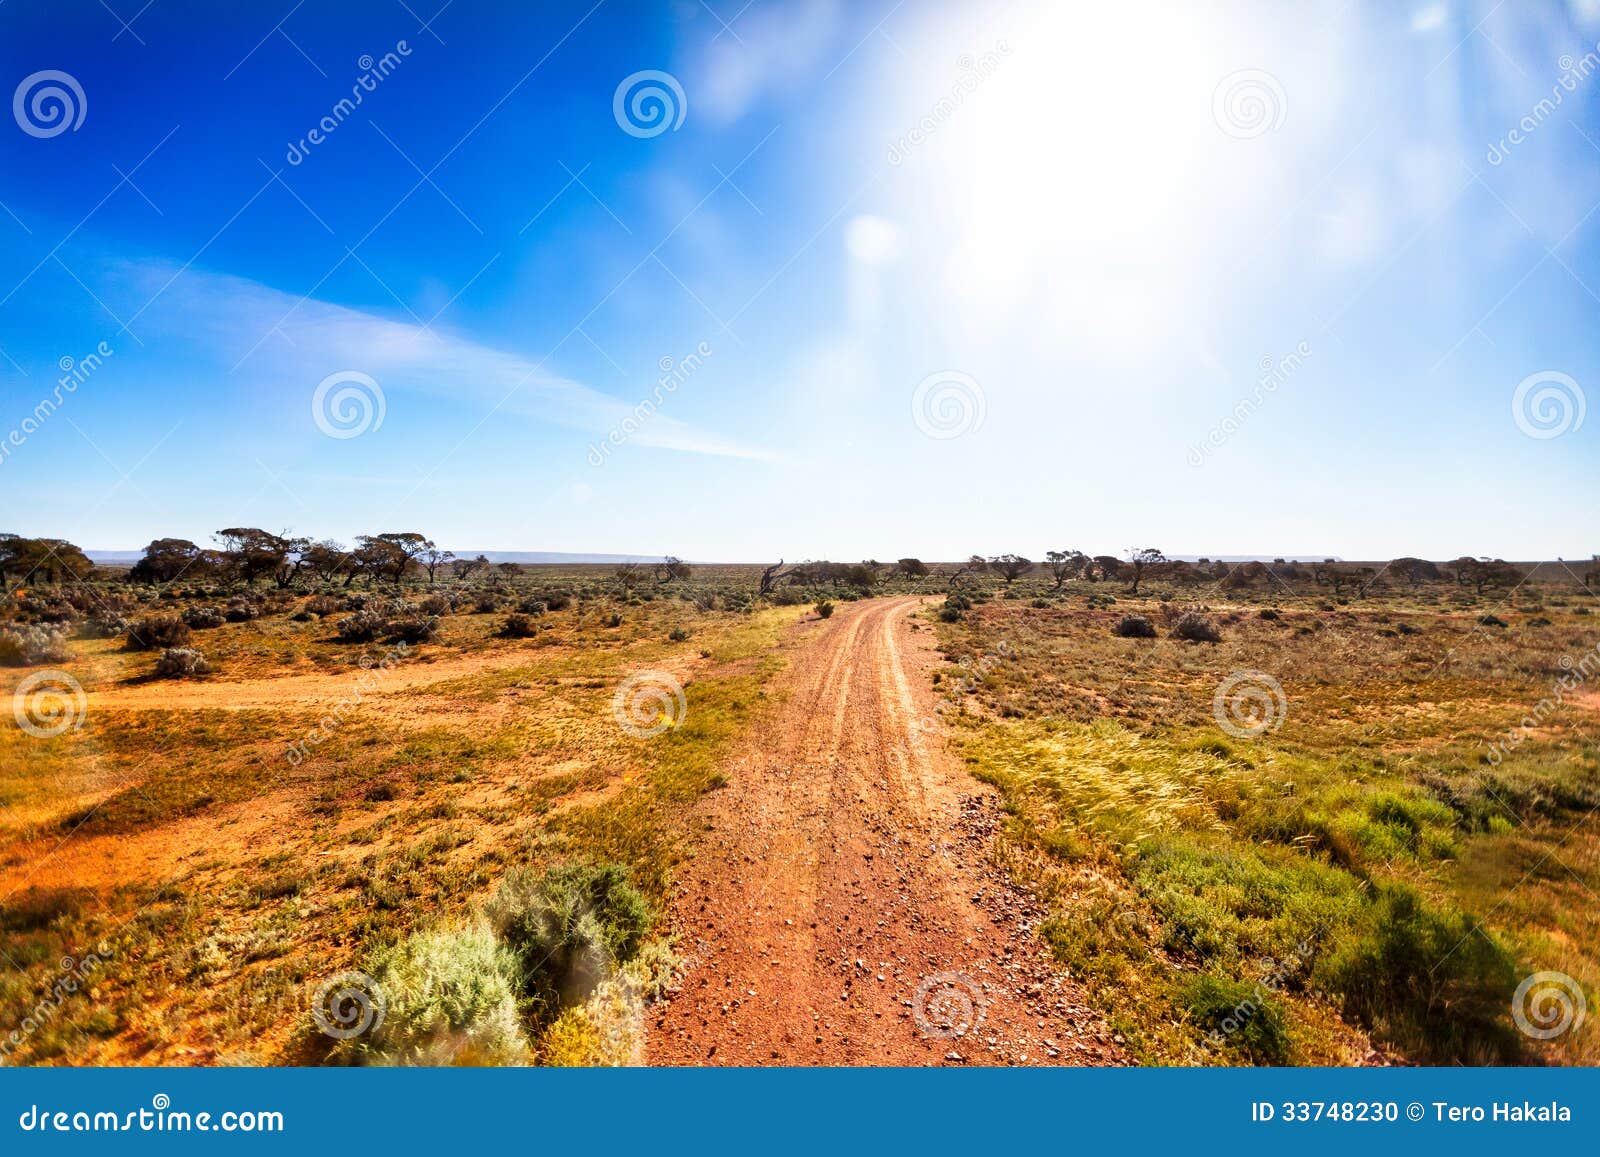 gravel road in australian outback in bright sunshine